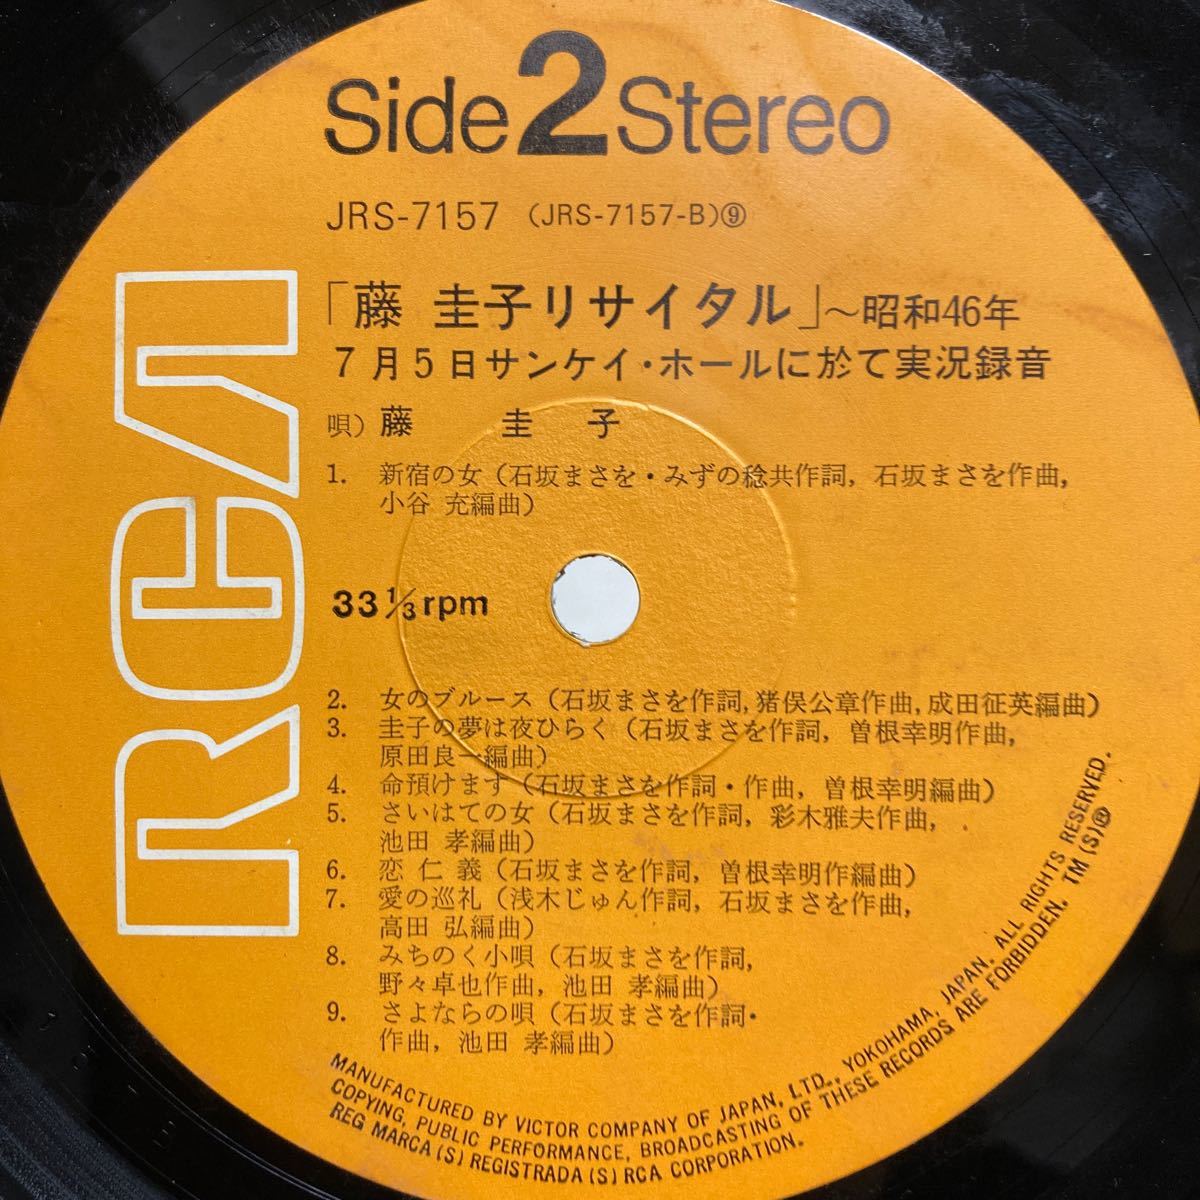  Fuji Keiko [ Fuji Keiko li rhinoceros taru]LP RCA JRS-7157 song bending 1971